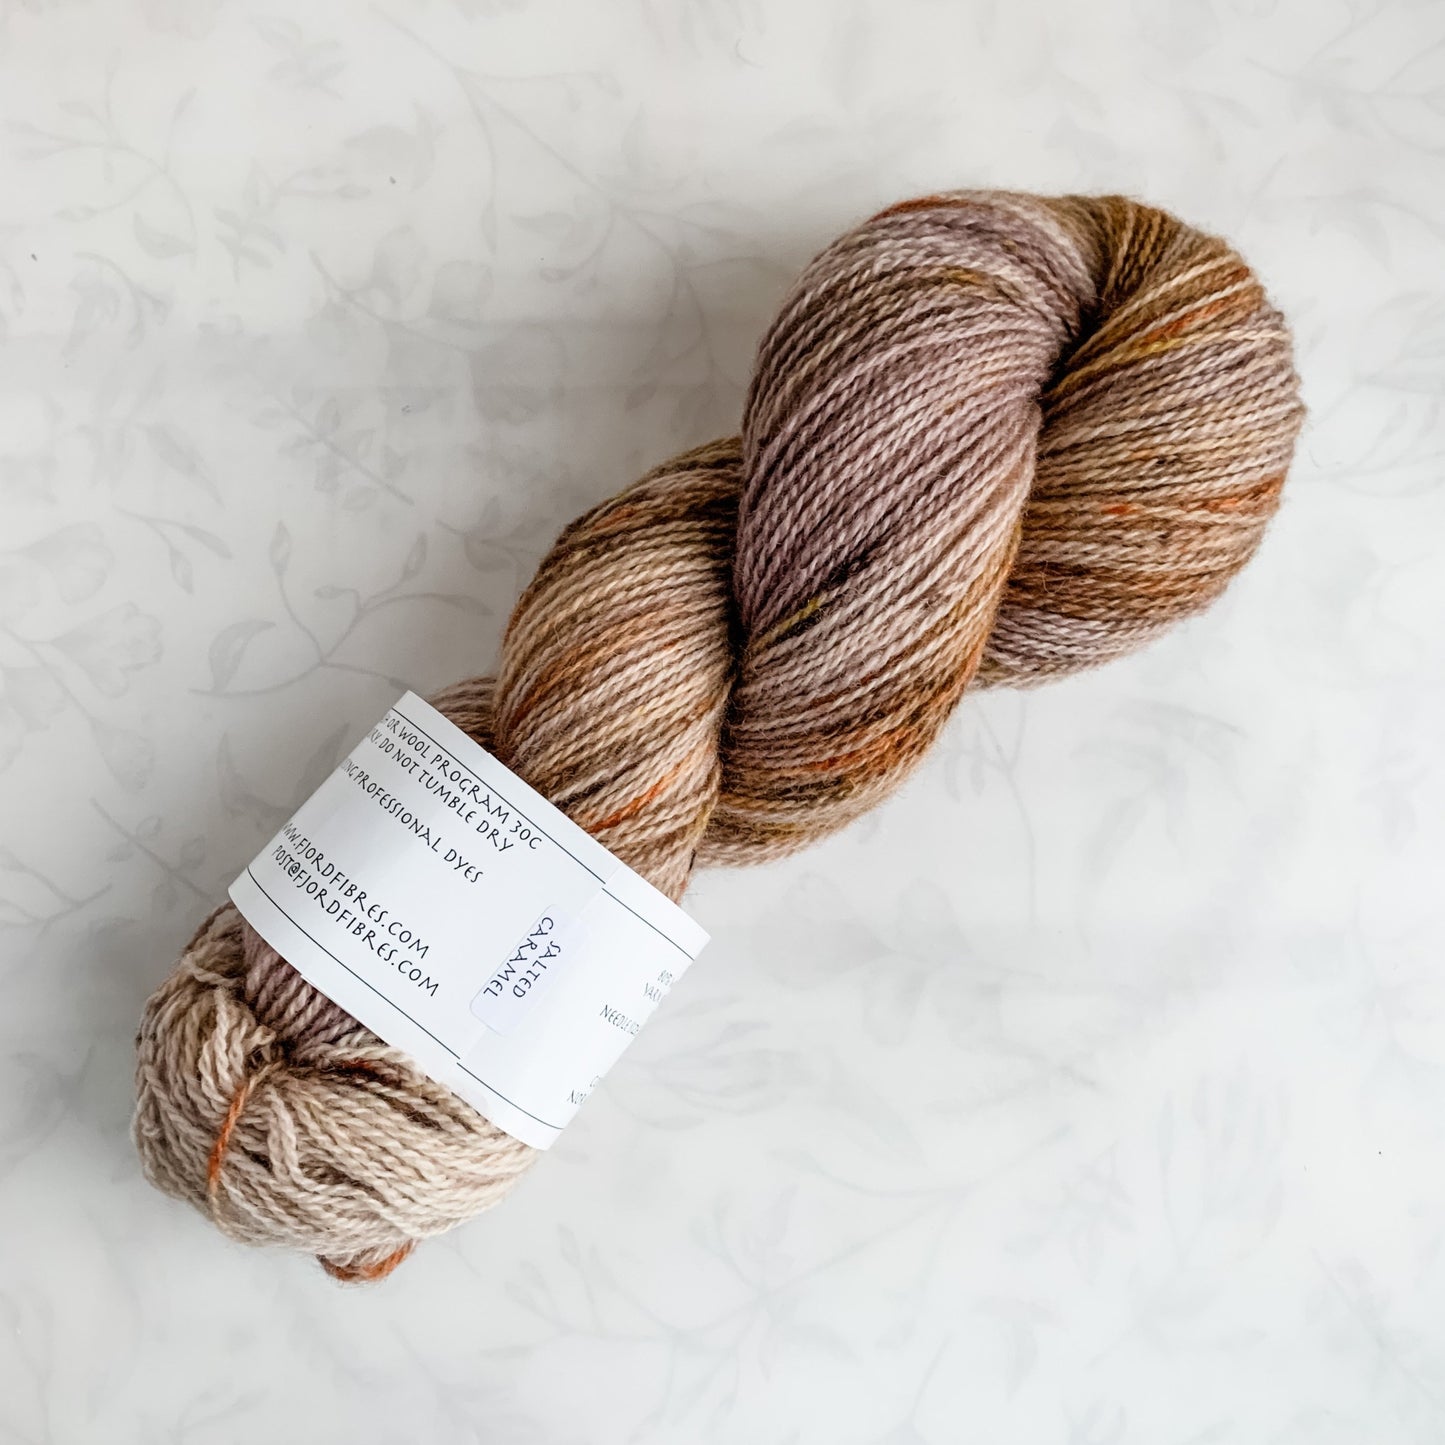 Salted Caramel - Trollfjord sock - Hand Dyed Yarn - Variegated Yarn